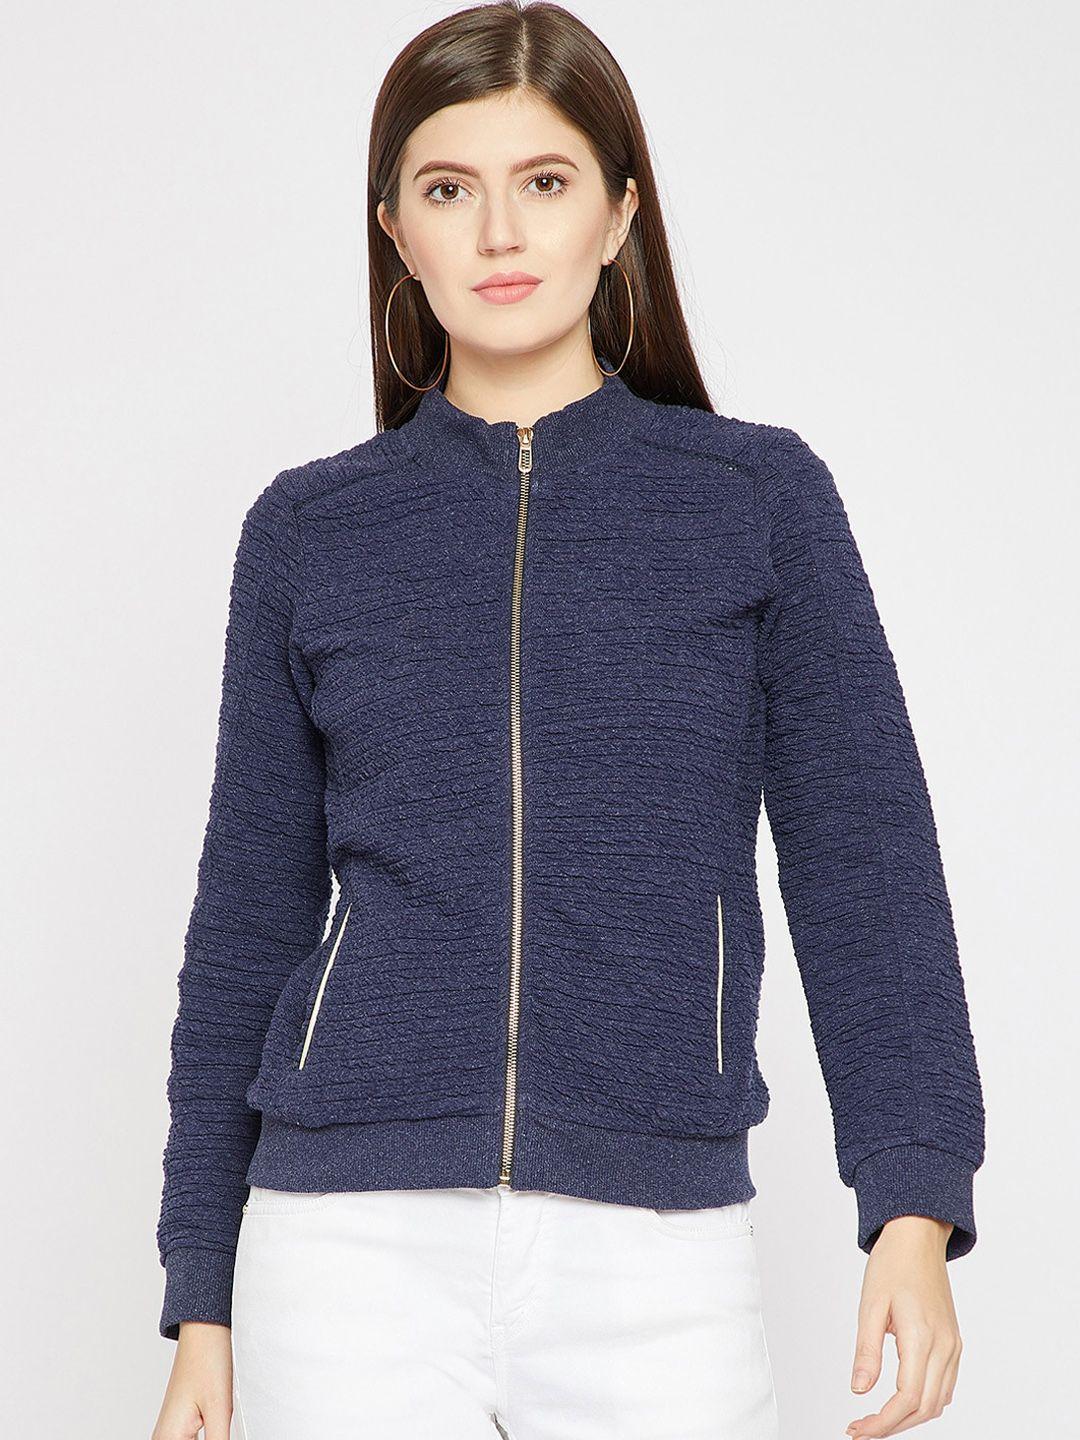 carlton london women navy blue solid sweatshirt